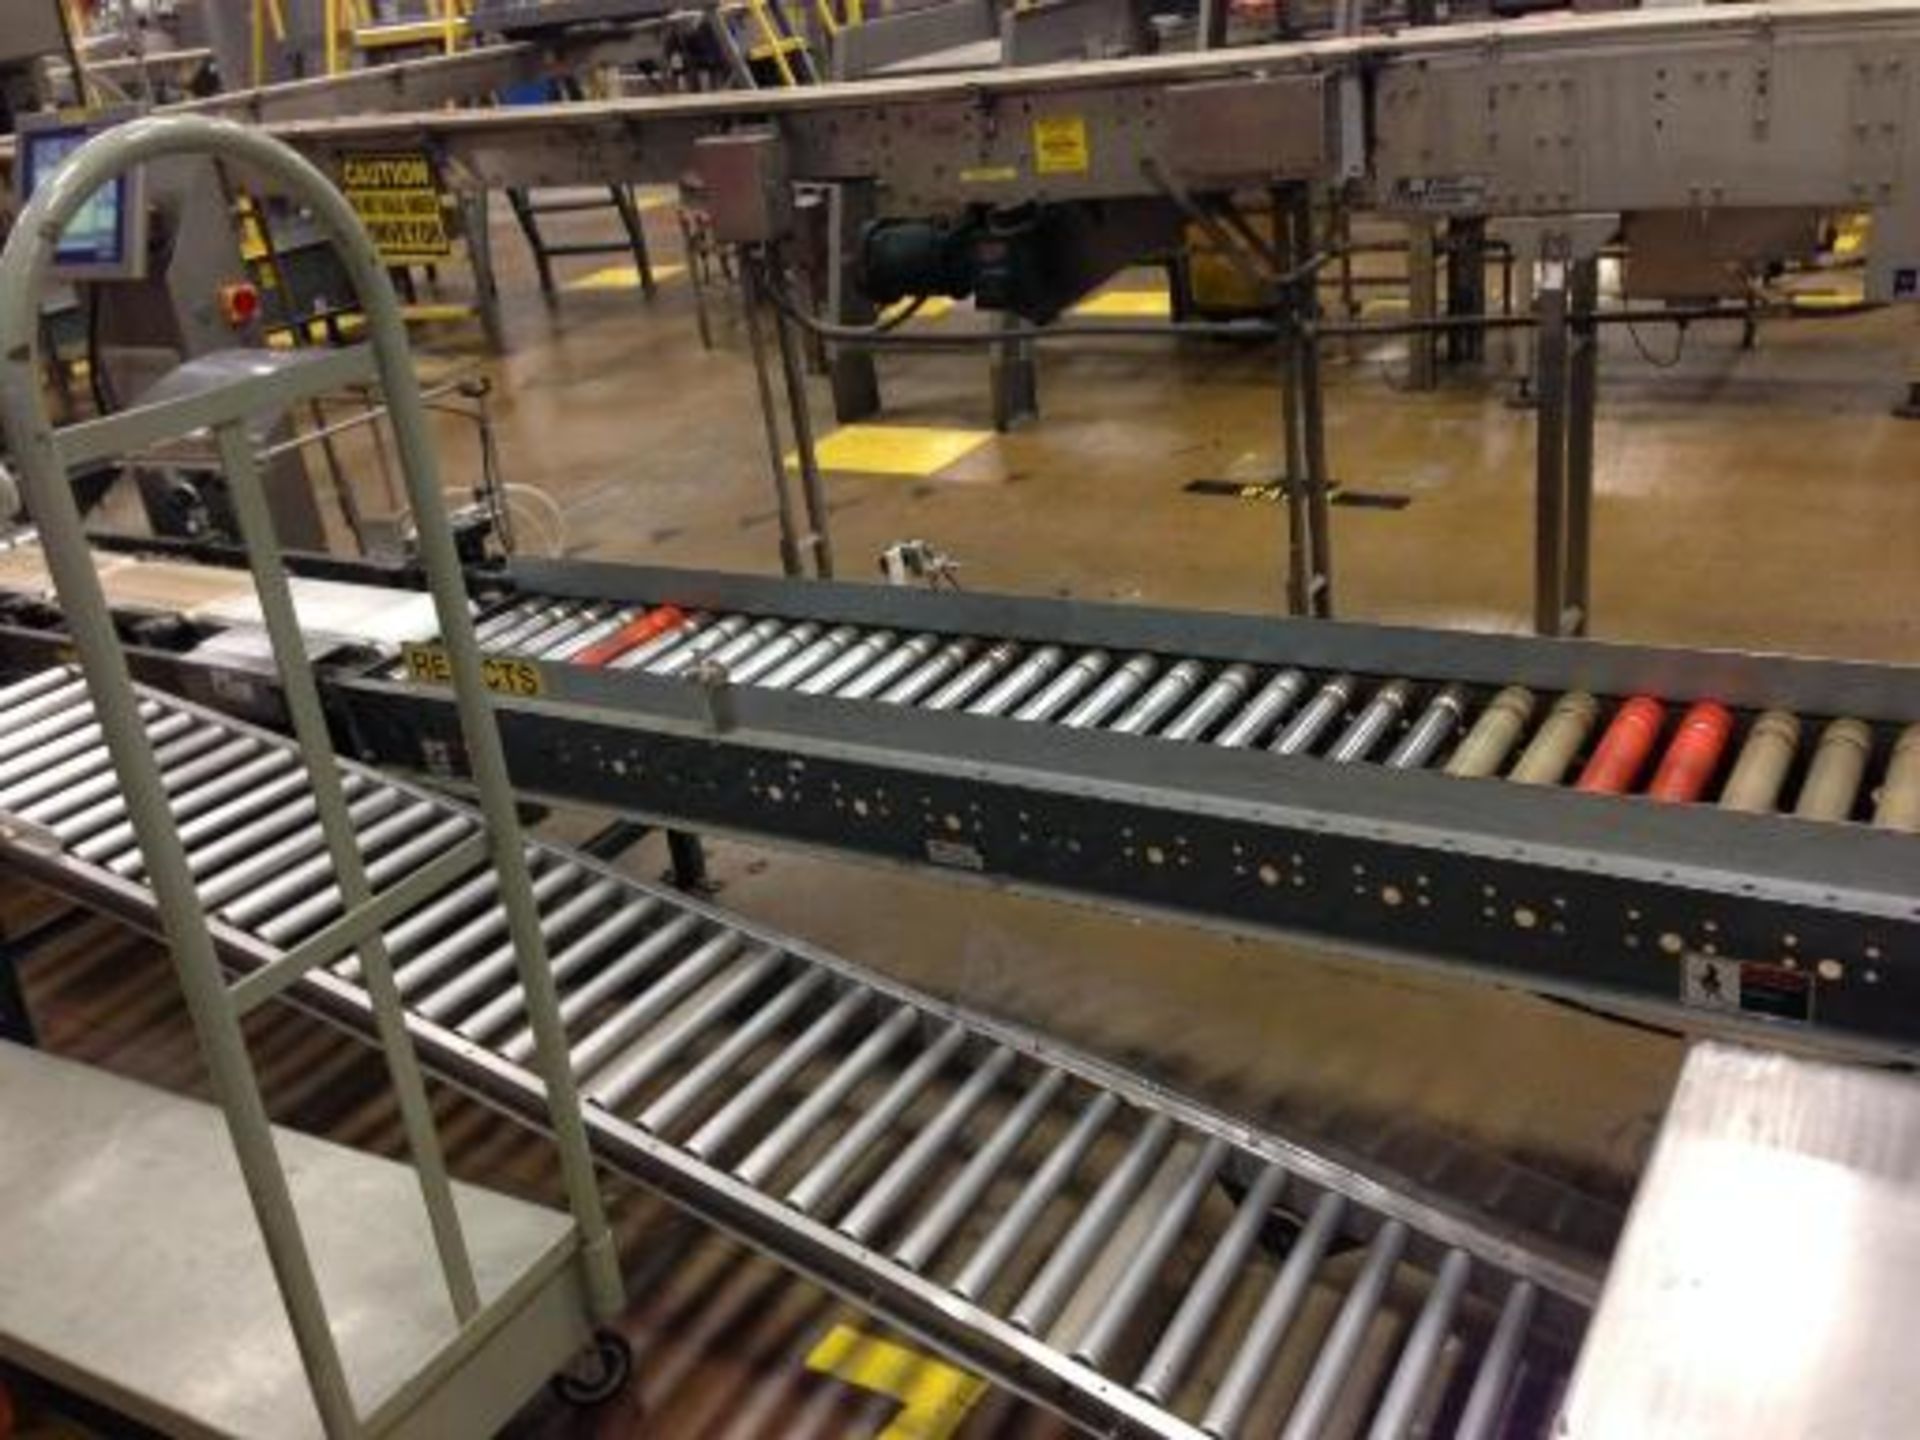 Hytrol power roller conveyor 40 feet straight. Located in Marion, Ohio Rigging Fee: $400